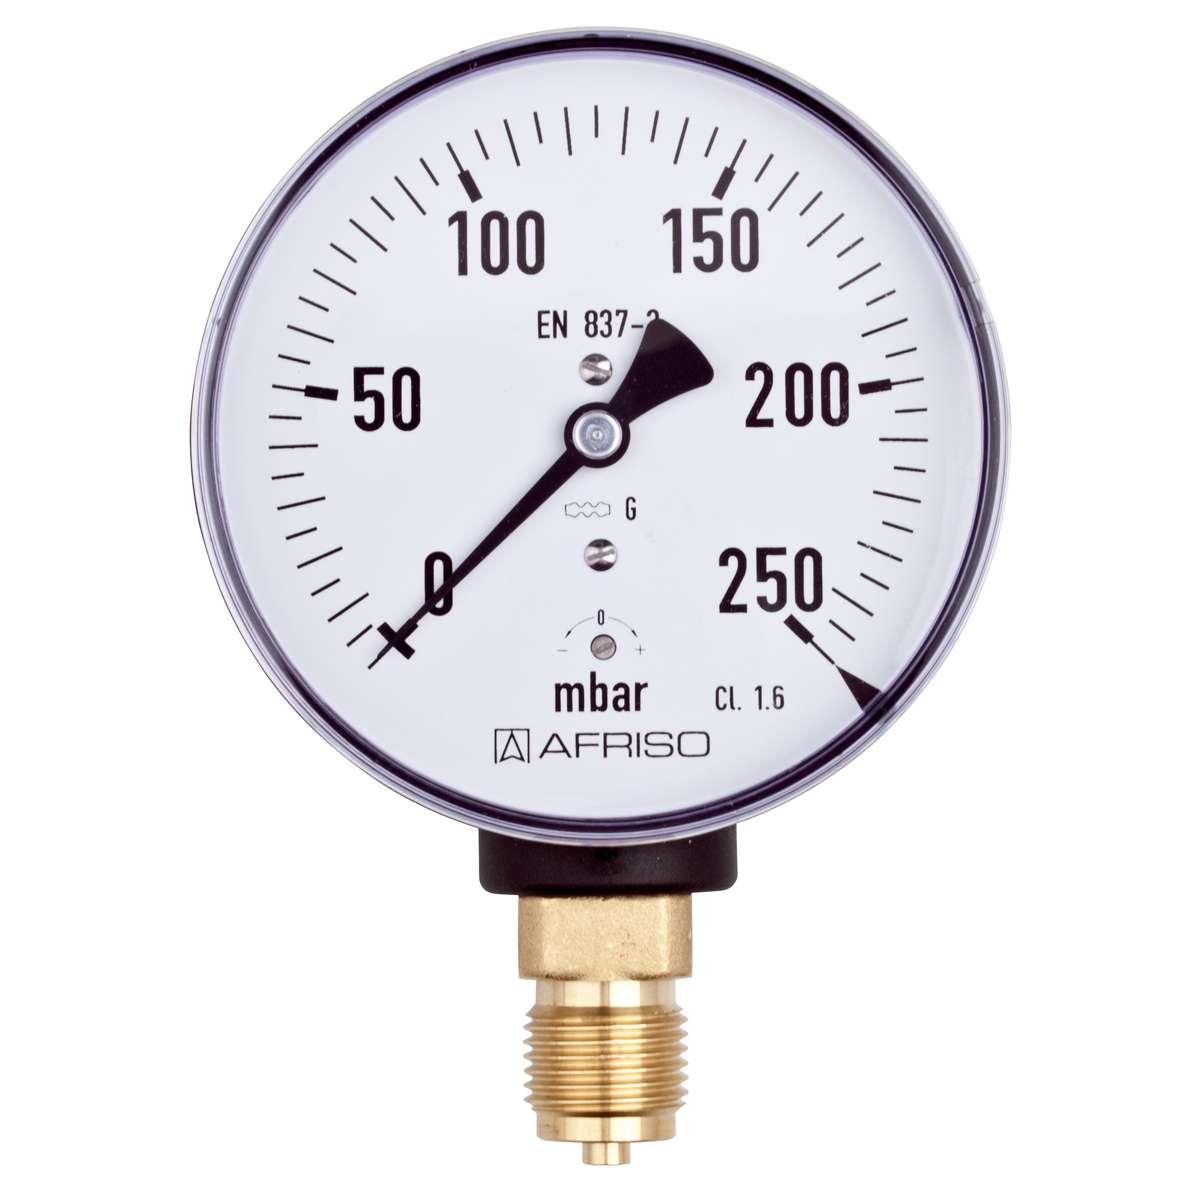 Manometr KP 100 pro plynná média, Ø 100 mm, 0 ÷ 250 mbar, G½", radiální, typ D2 - AFRISO.CZ